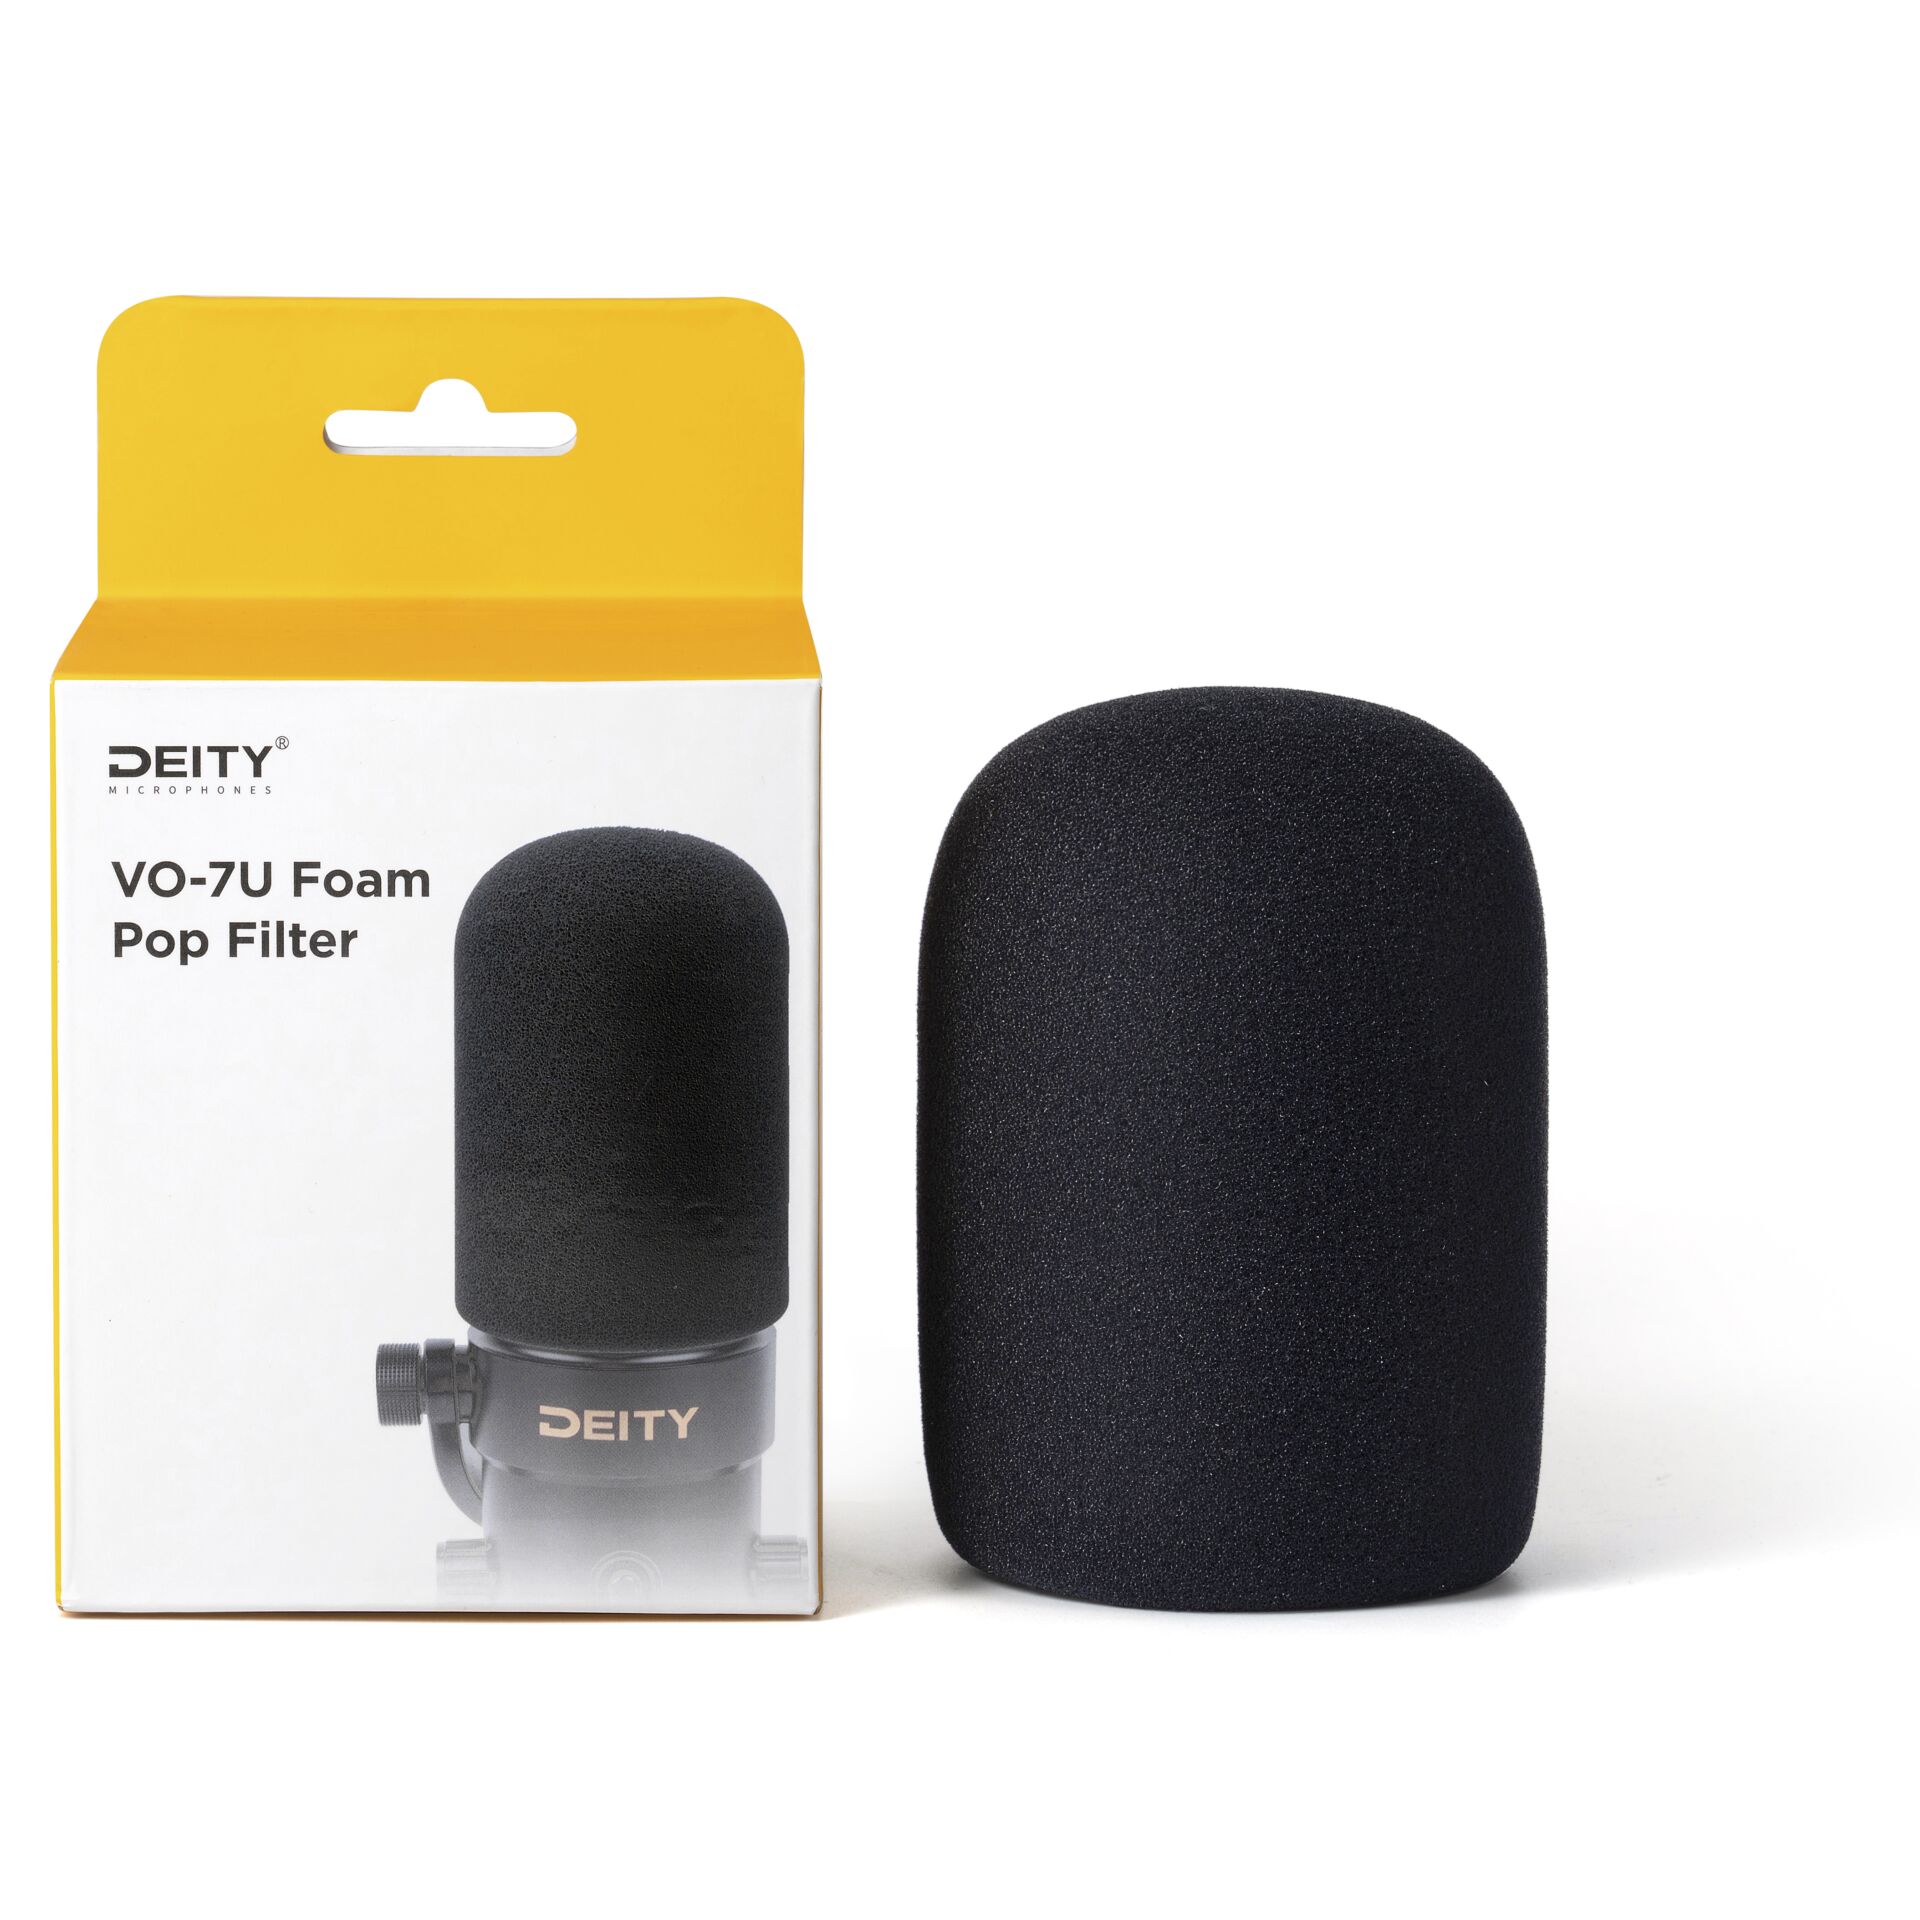 Deity VO-7U Foam Pop Filter